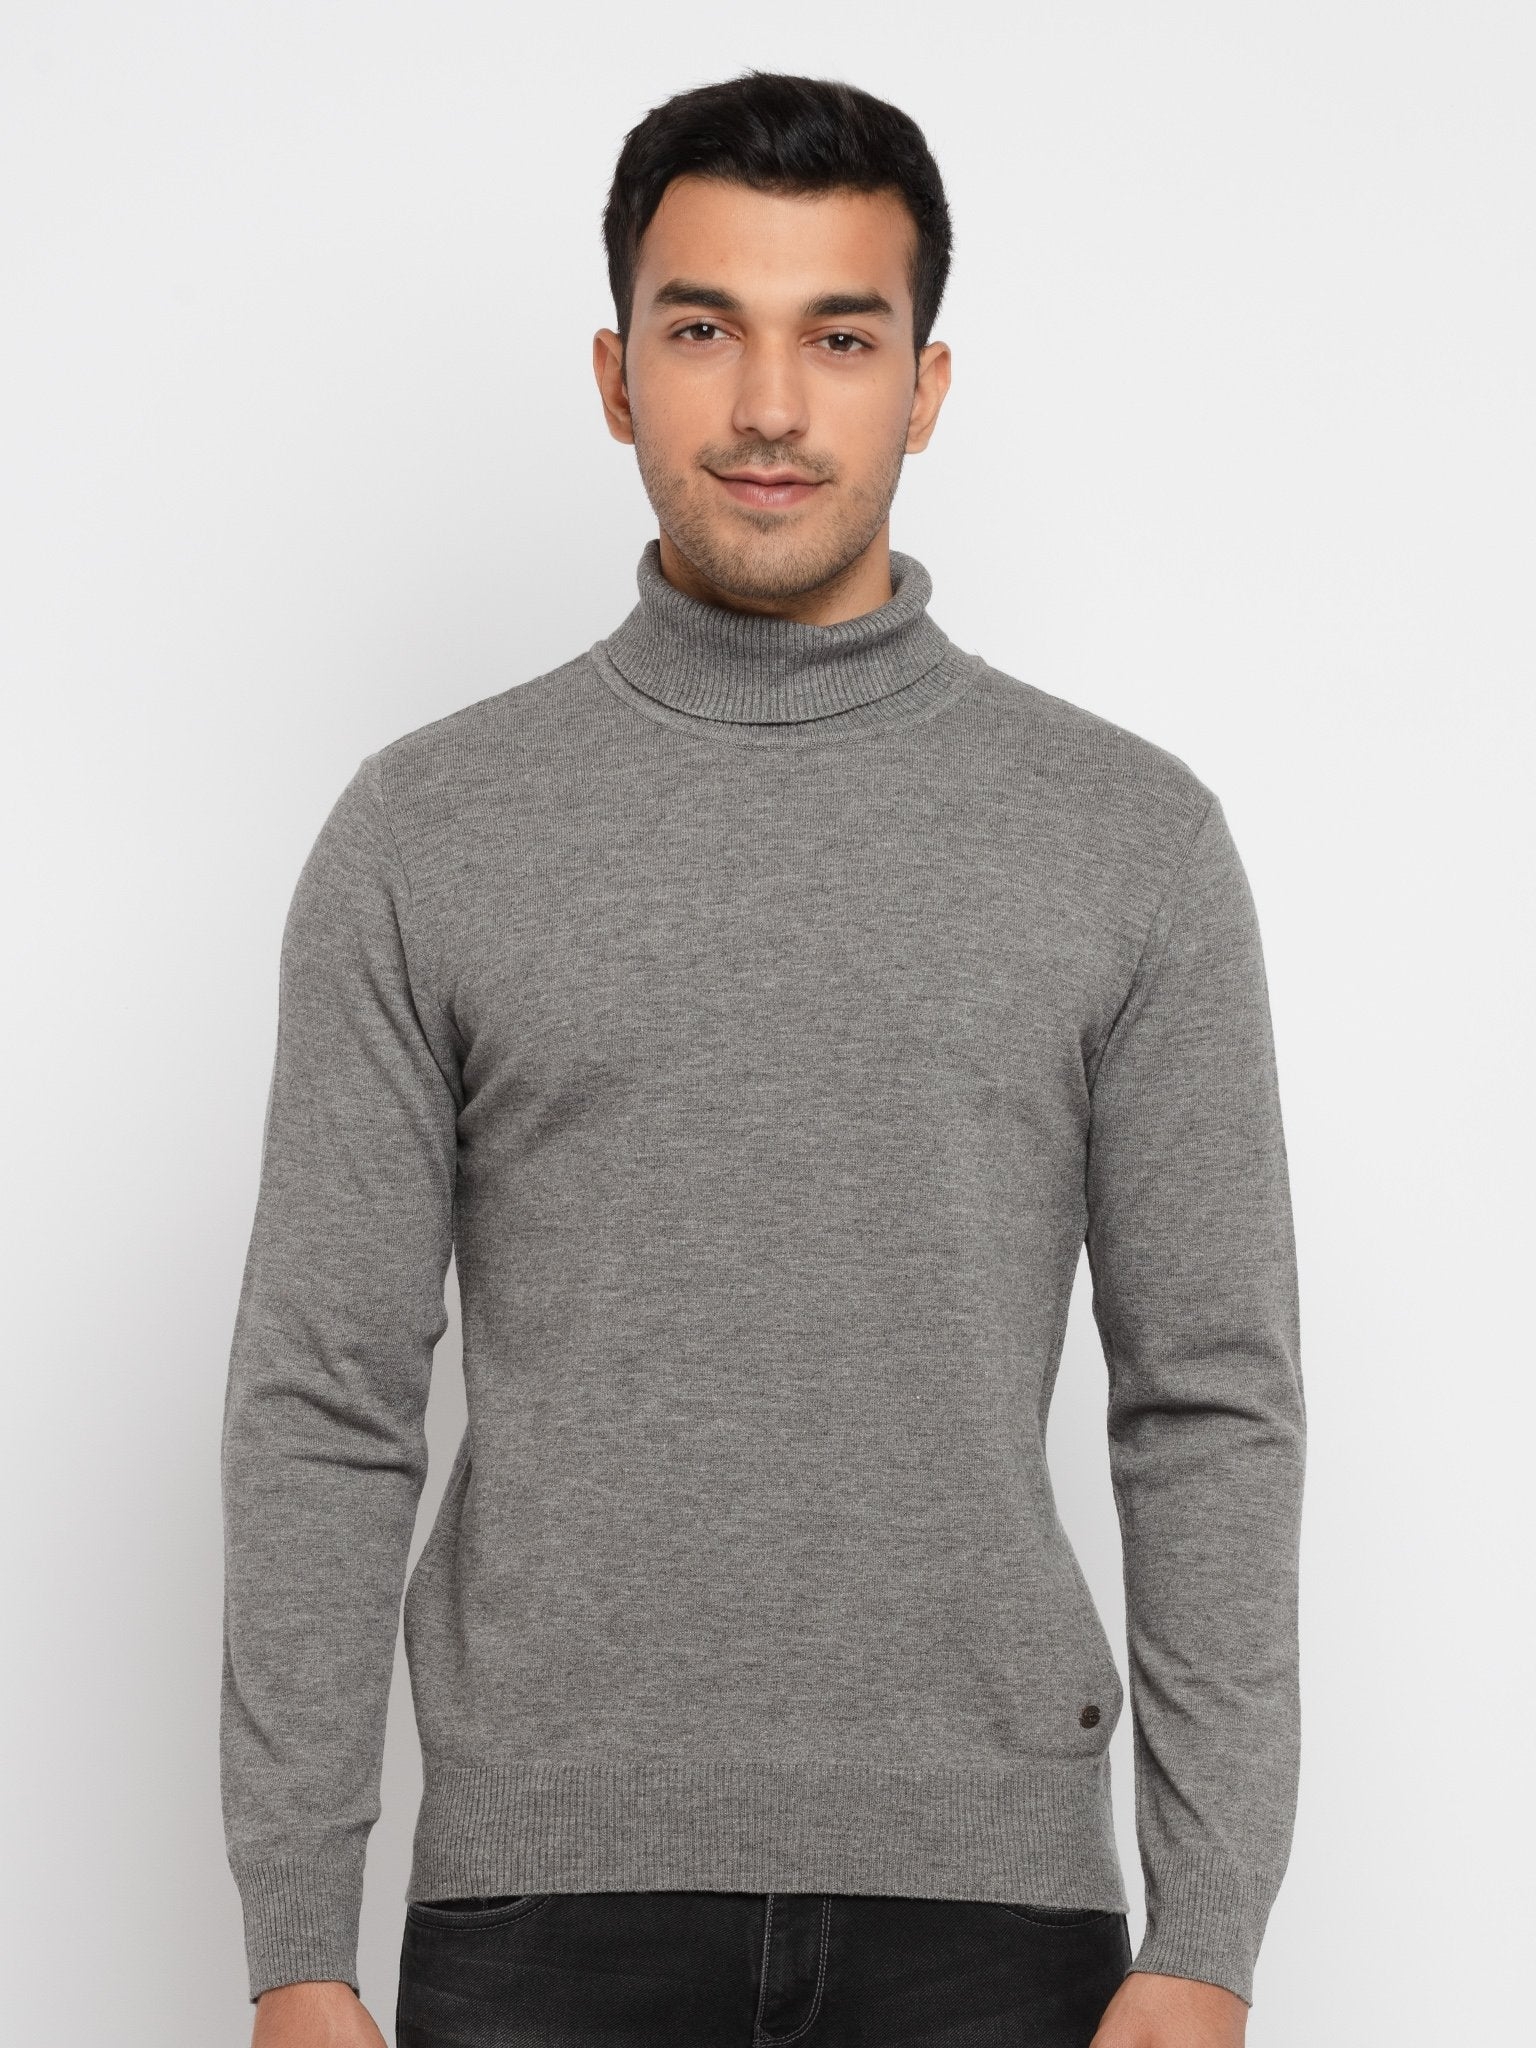 Men's Grey Polycotton Melange Sweaters